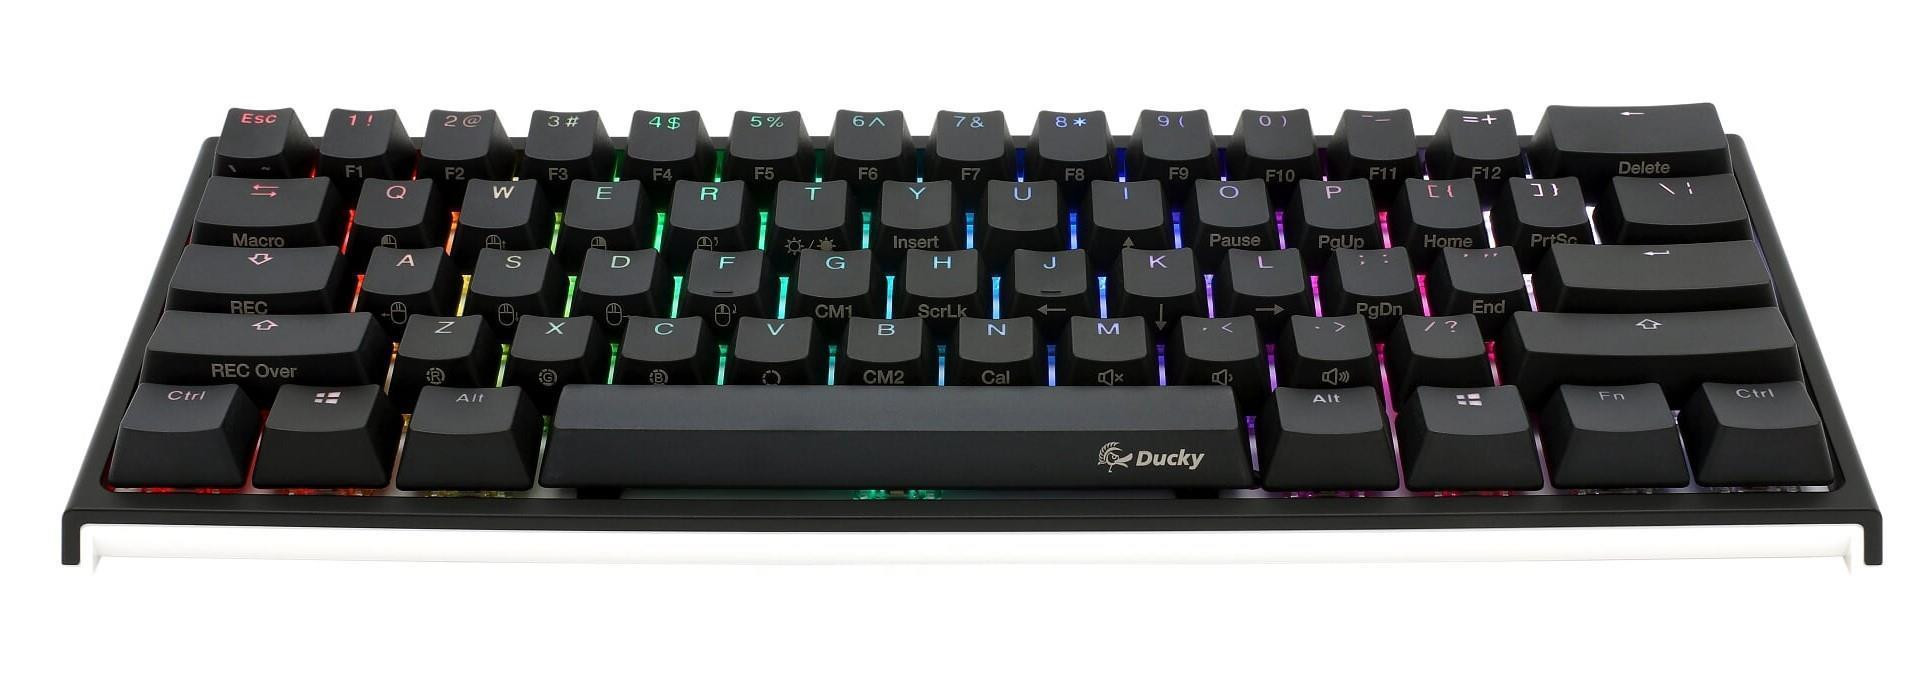 Ducky One2 Mini 60% RGB USB Mechanical Gaming Keyboard Brown Cherry MX